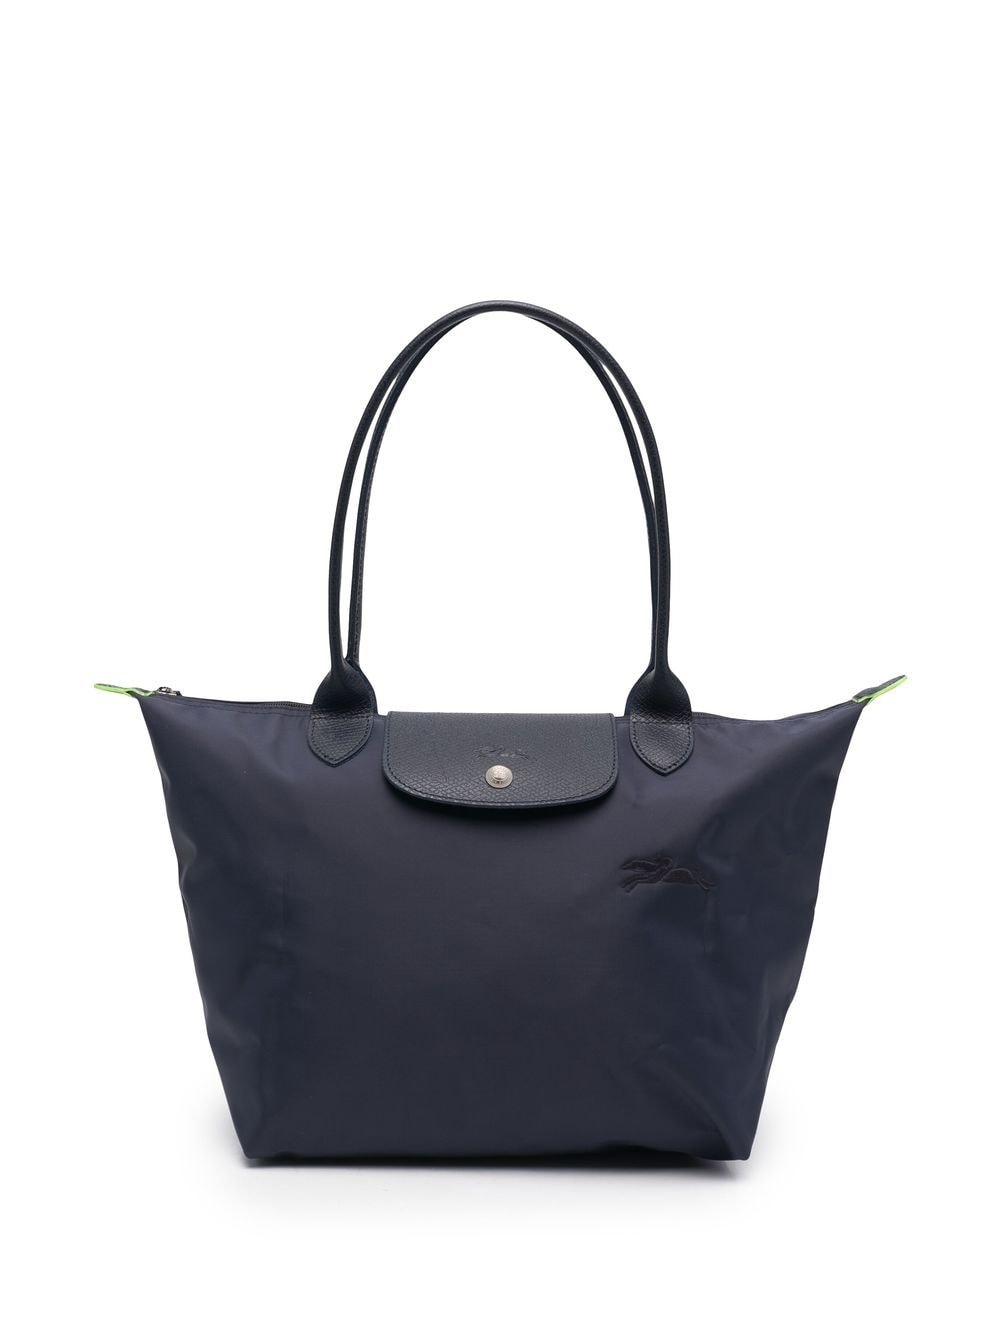 Longchamp Medium Le Pliage Leather Hobo Bag - Farfetch